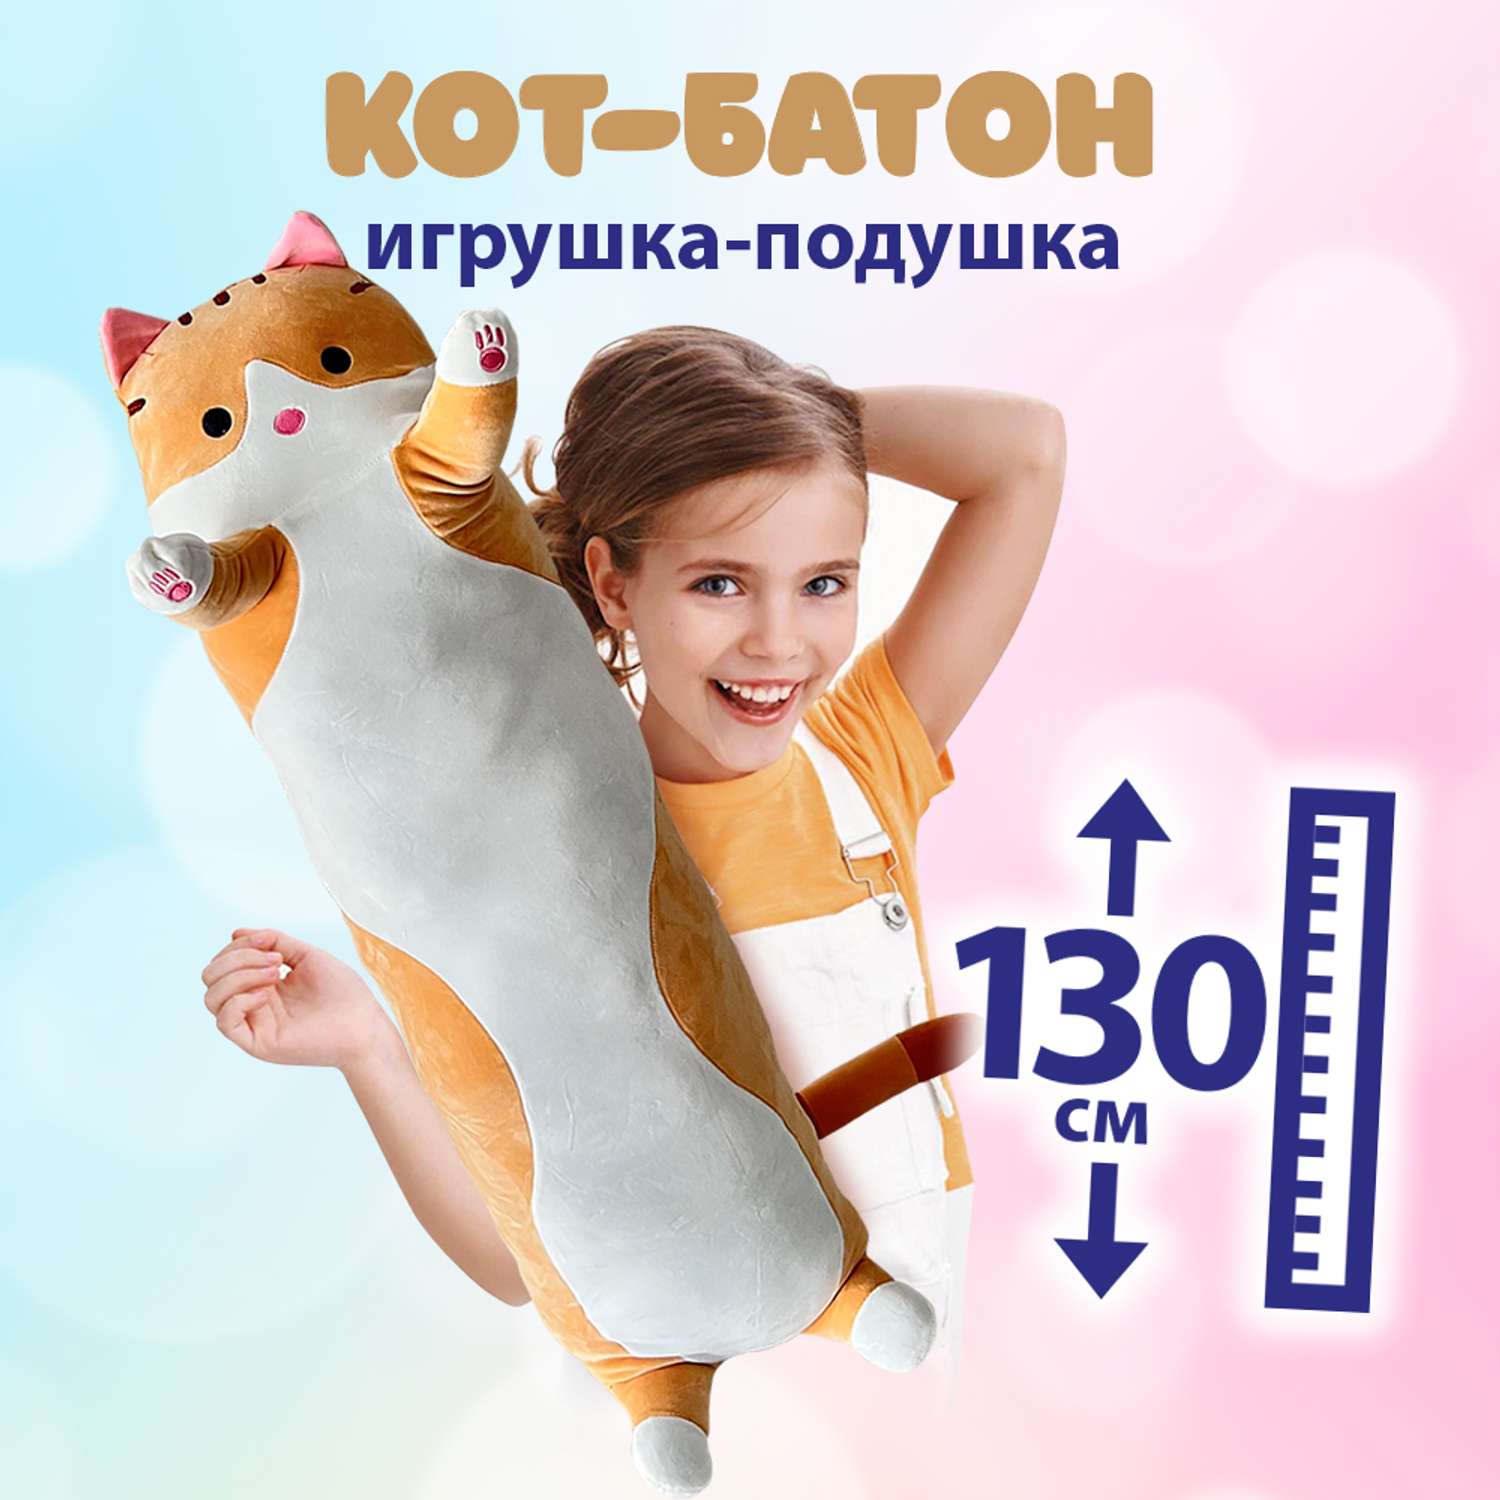 Подушка-обнимашка Territory кот Батон антистресс рыжий 130 см - фото 1